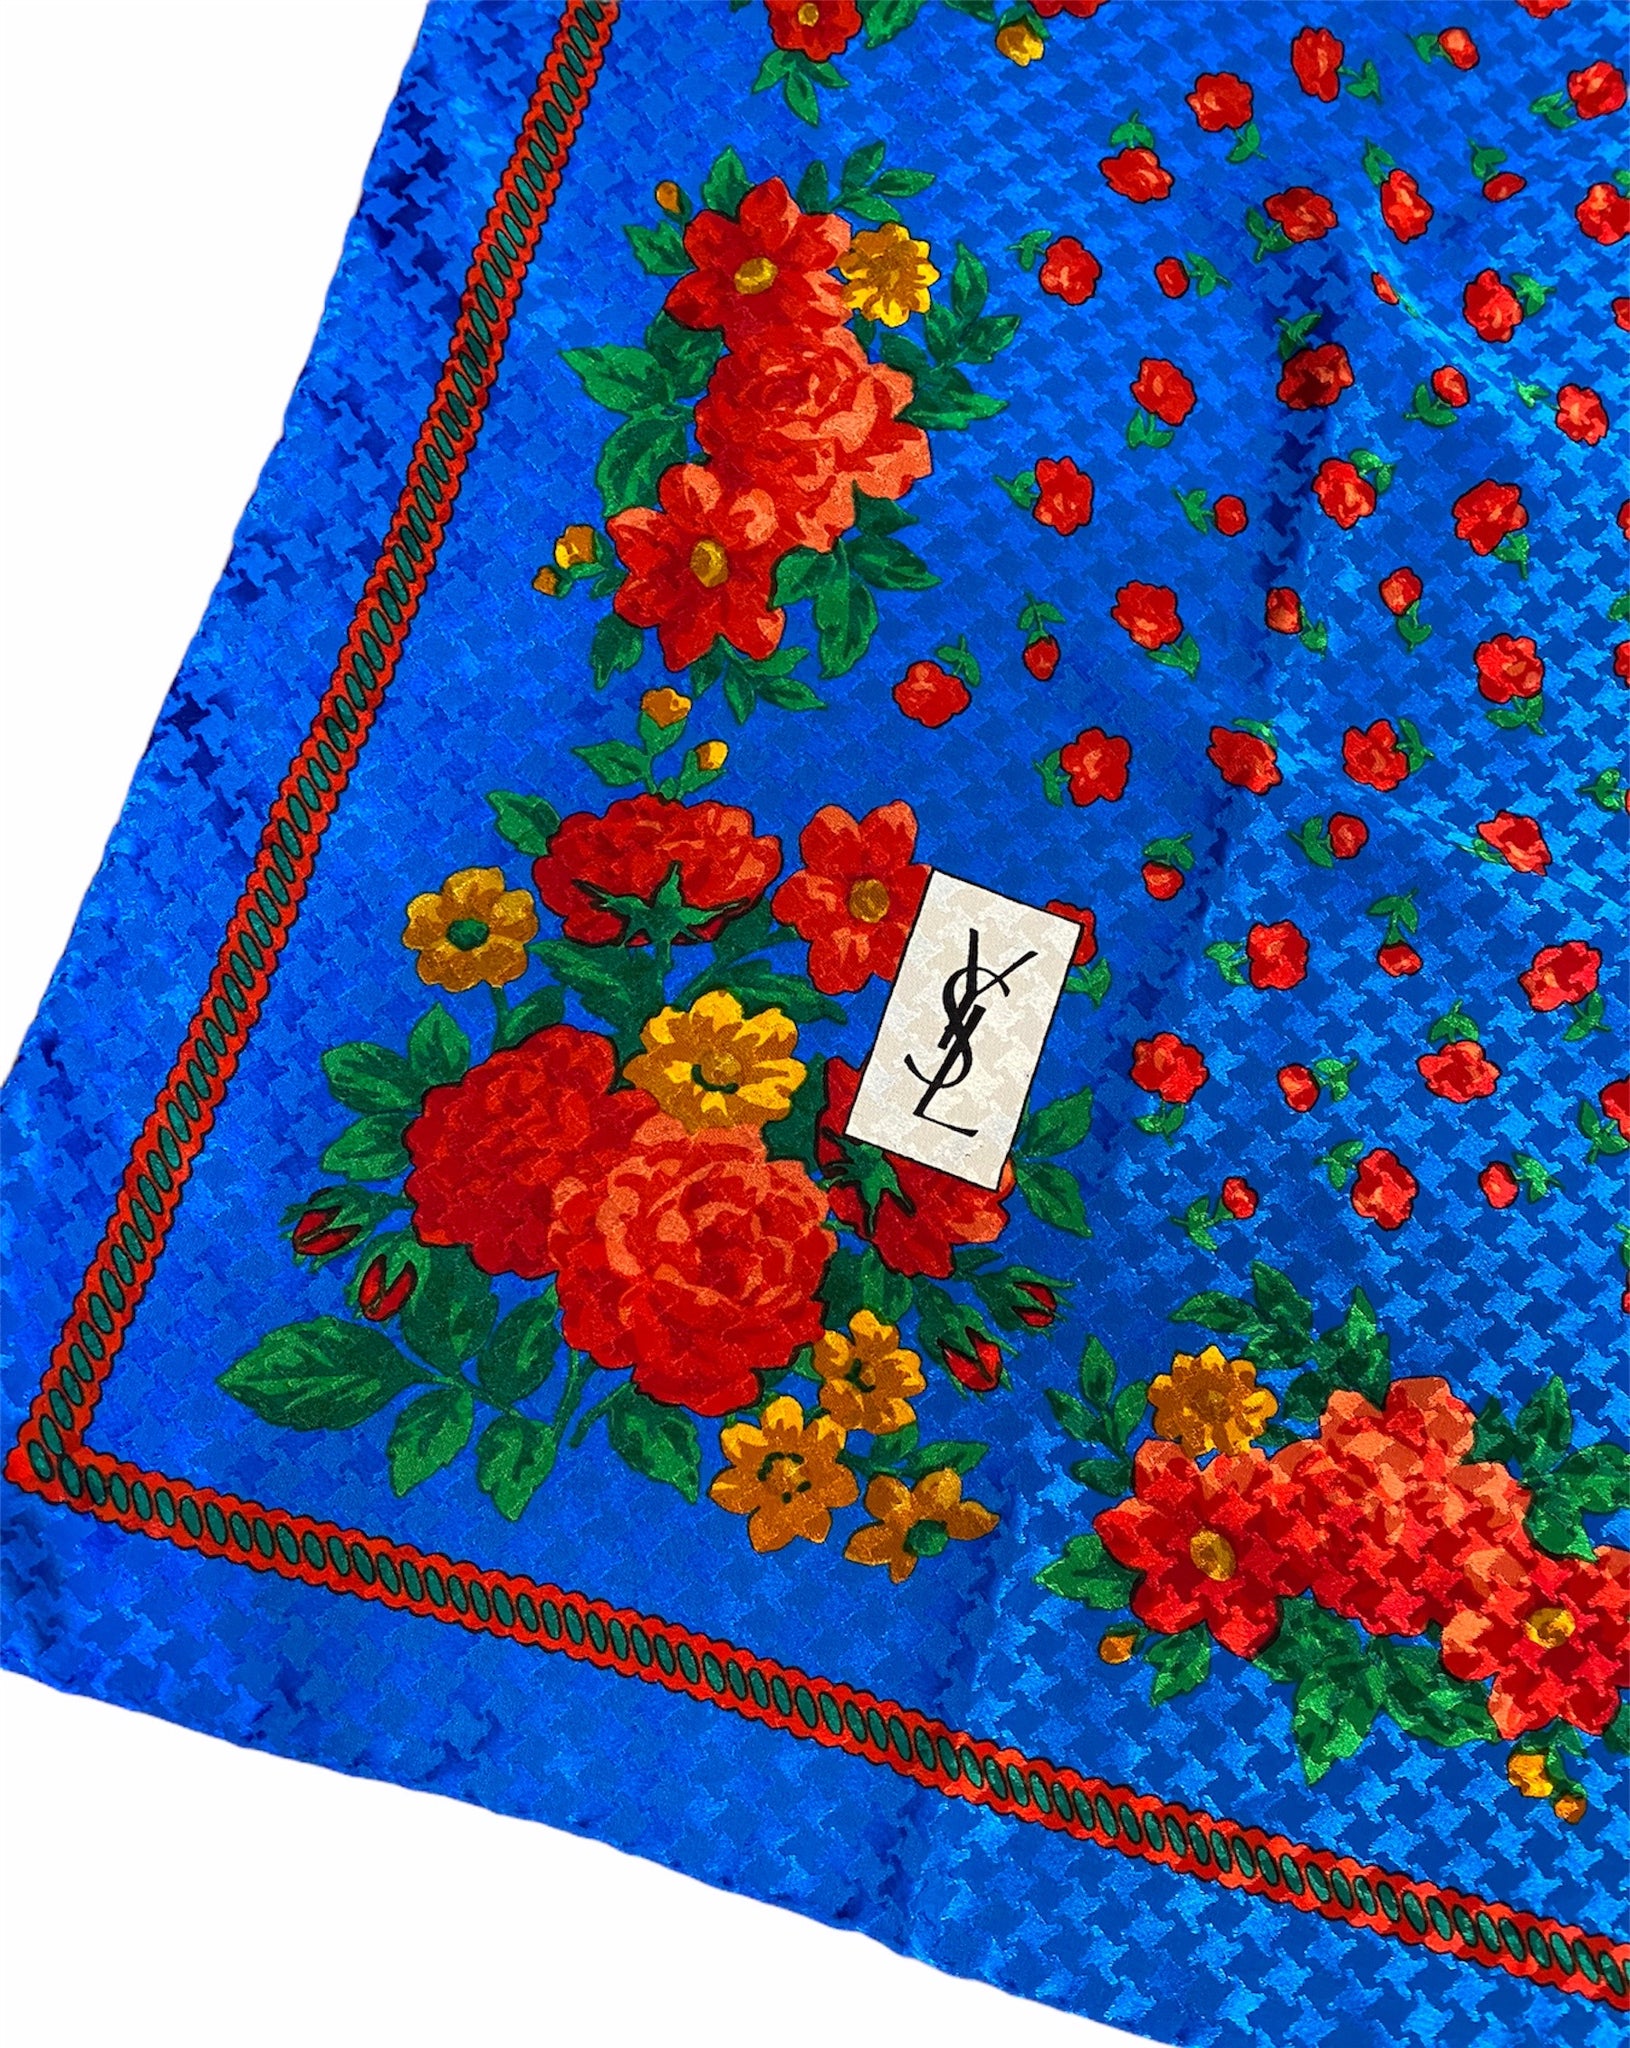 YSL 70s Bright Blue Polka Dot Floral Silk Scarf DETAIL 2 of 3